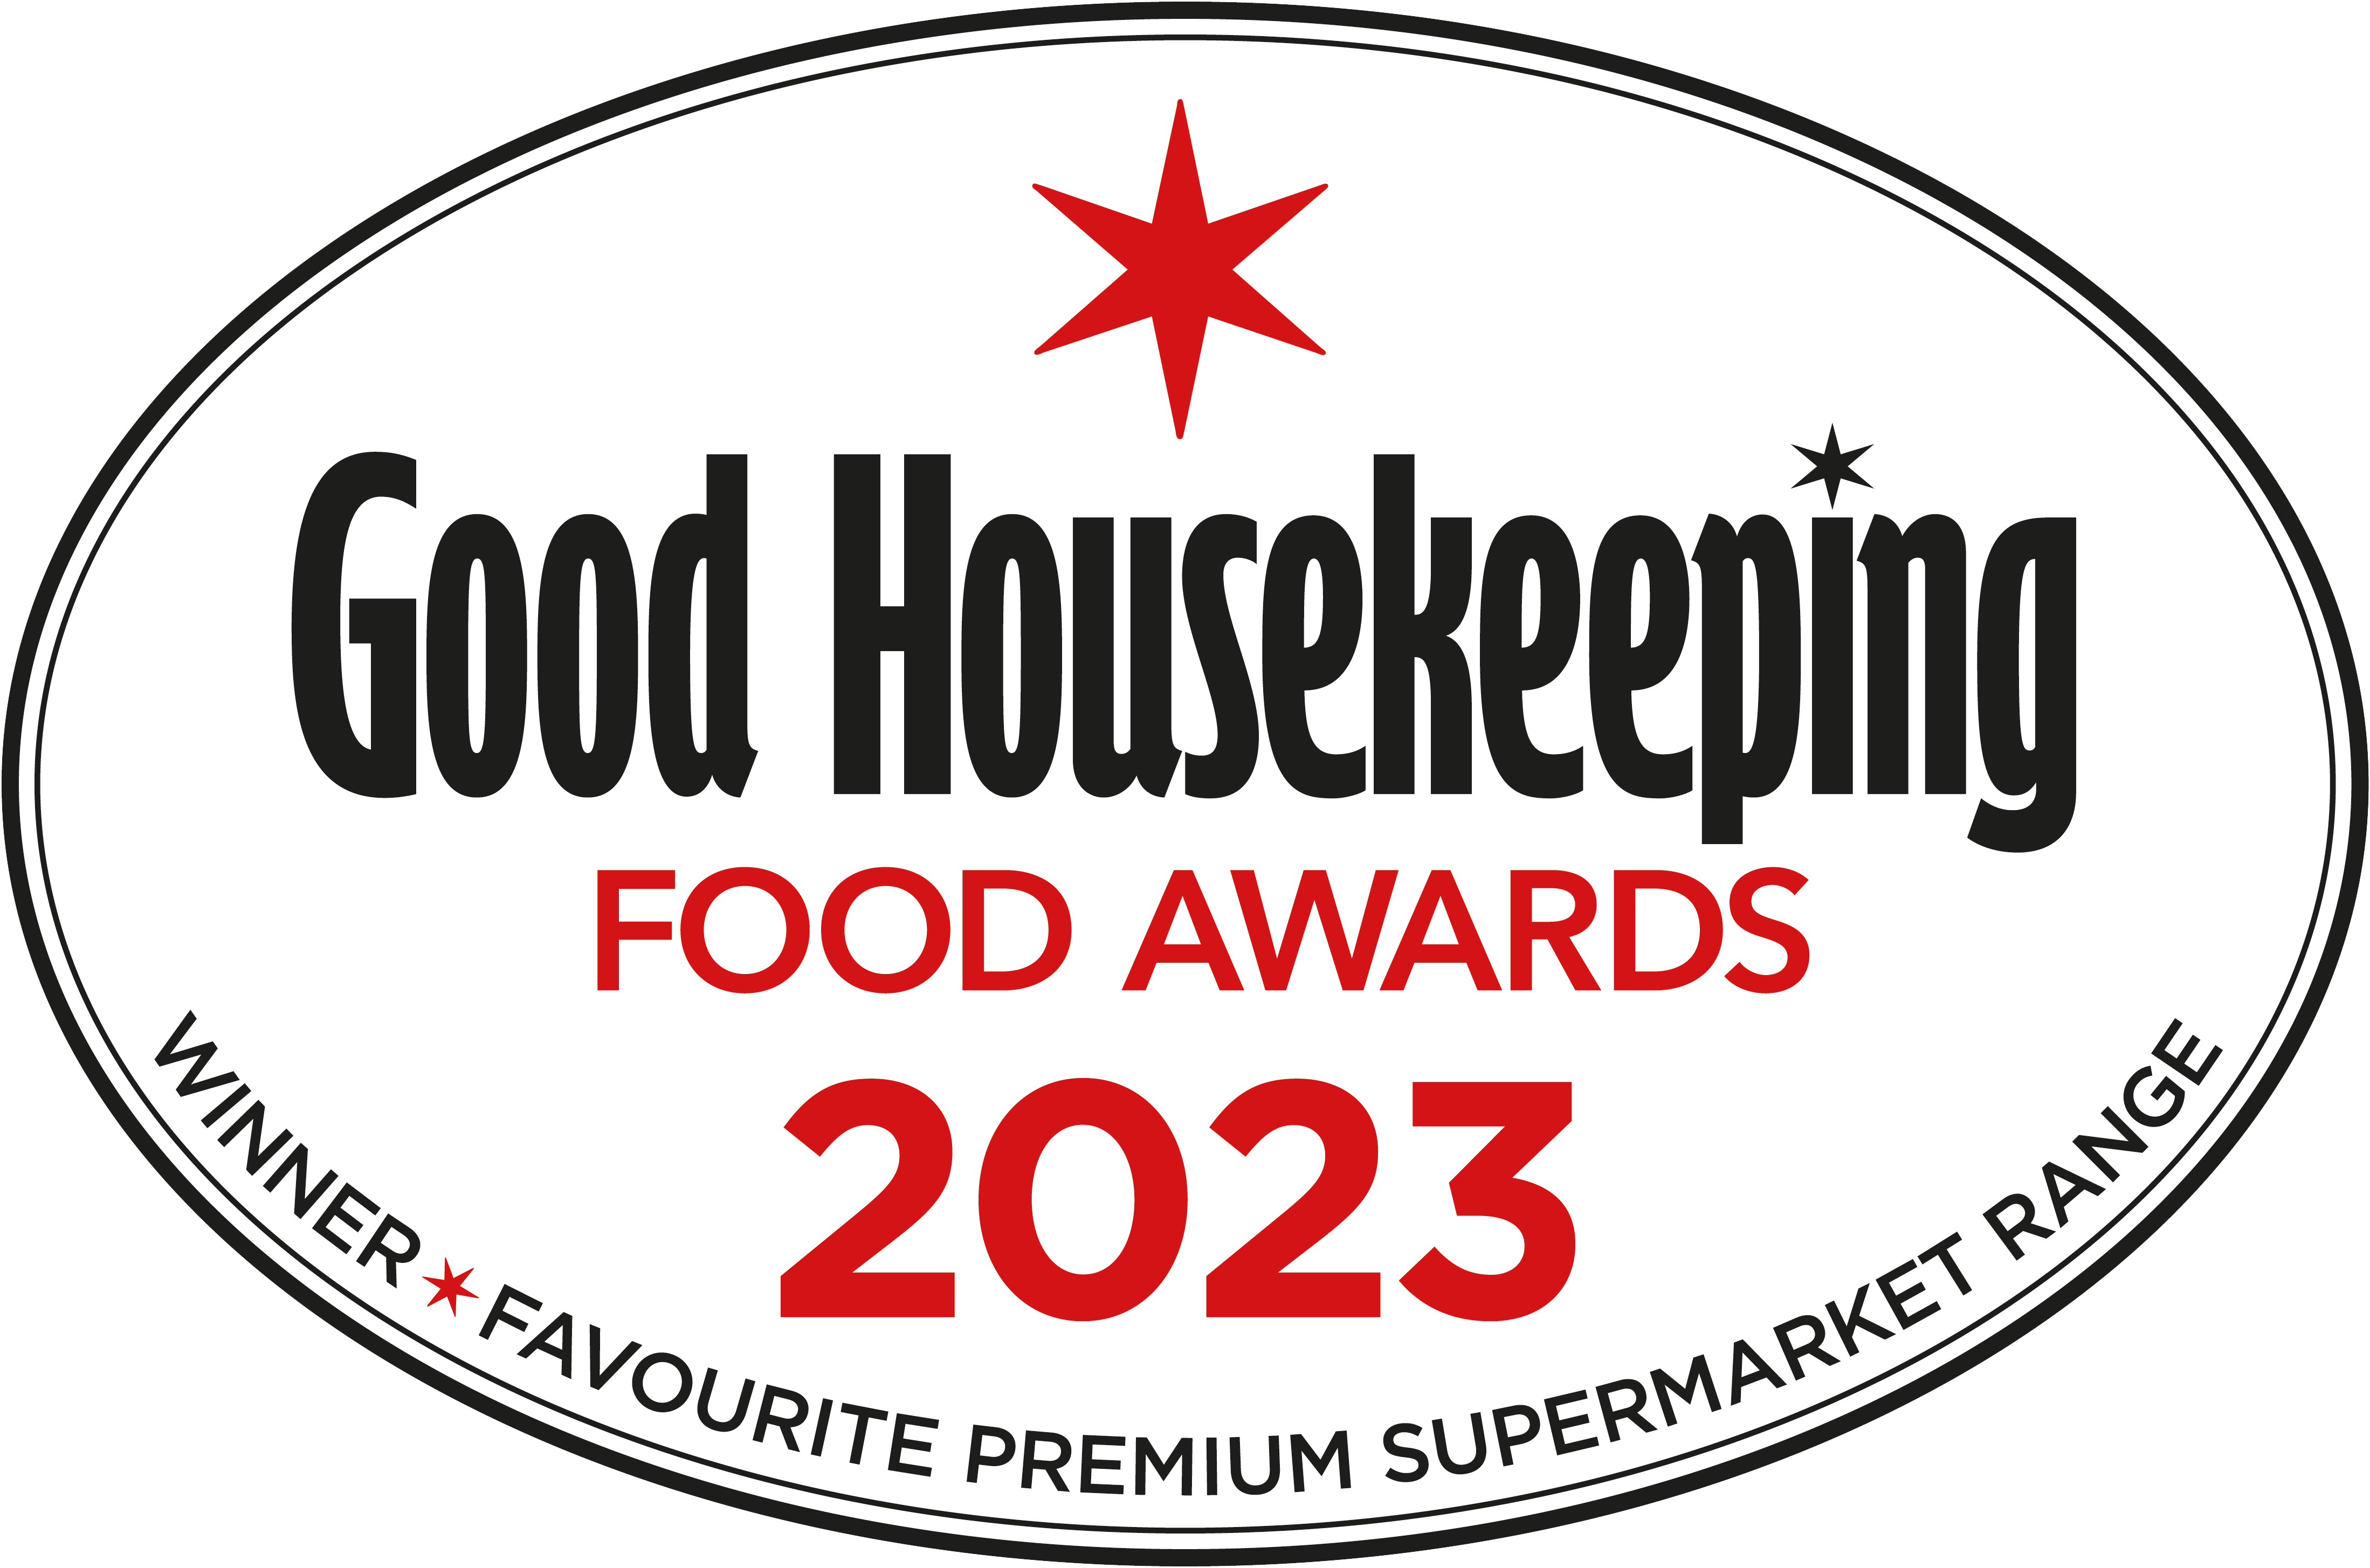 Good Housekeeping Food Awards 2023